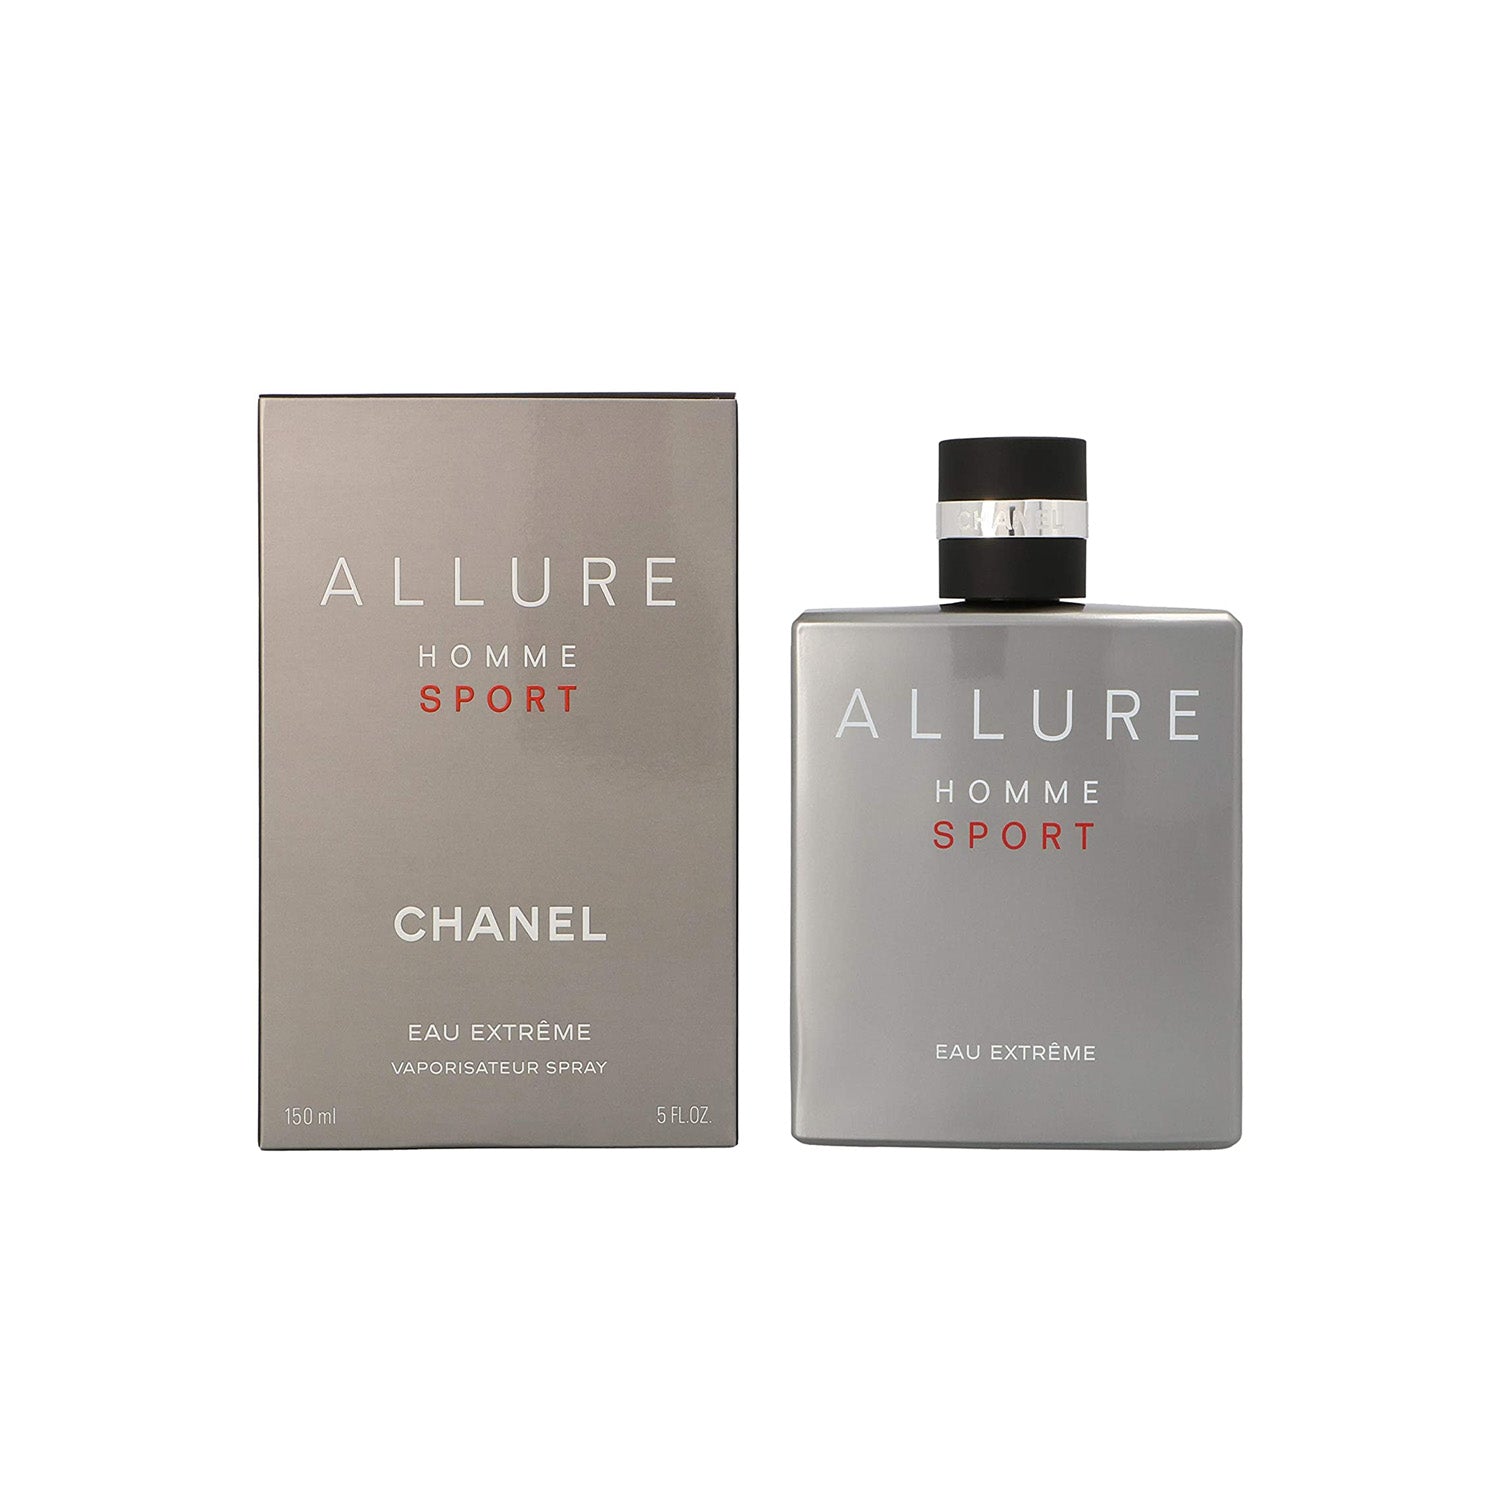 Allure Homme Sport Eau Extreme Chanel cologne 100ml - a fragrance